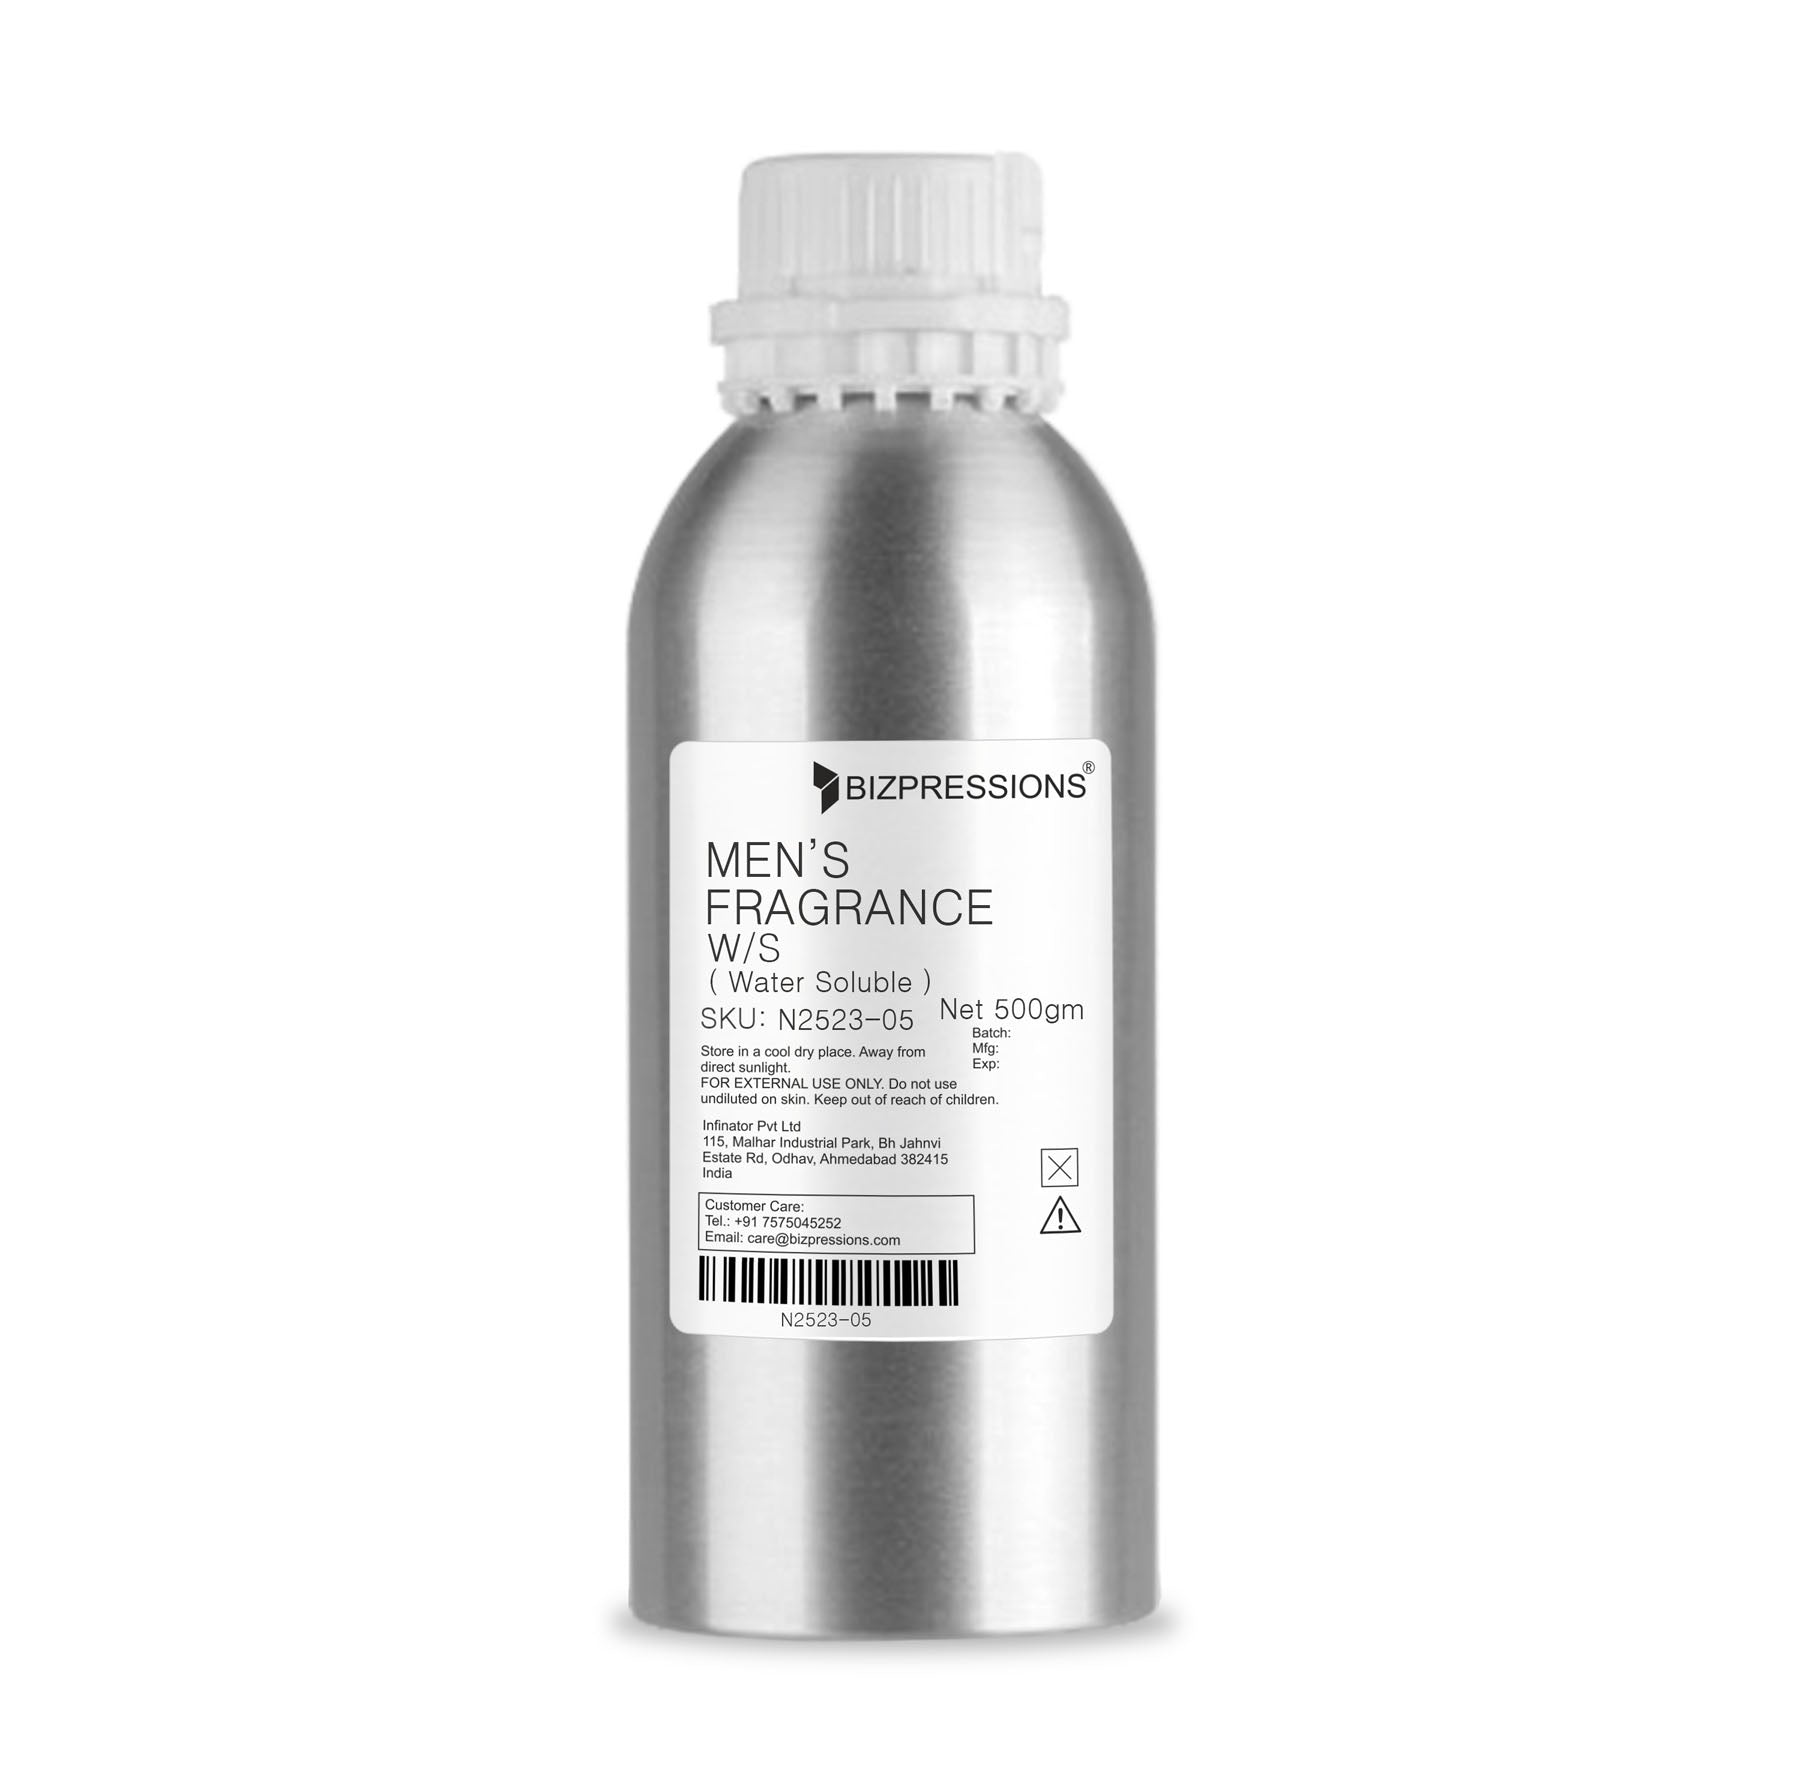 MEN'S FRAGRANCE W/S - Fragrance ( Water Soluble ) - 500 gm